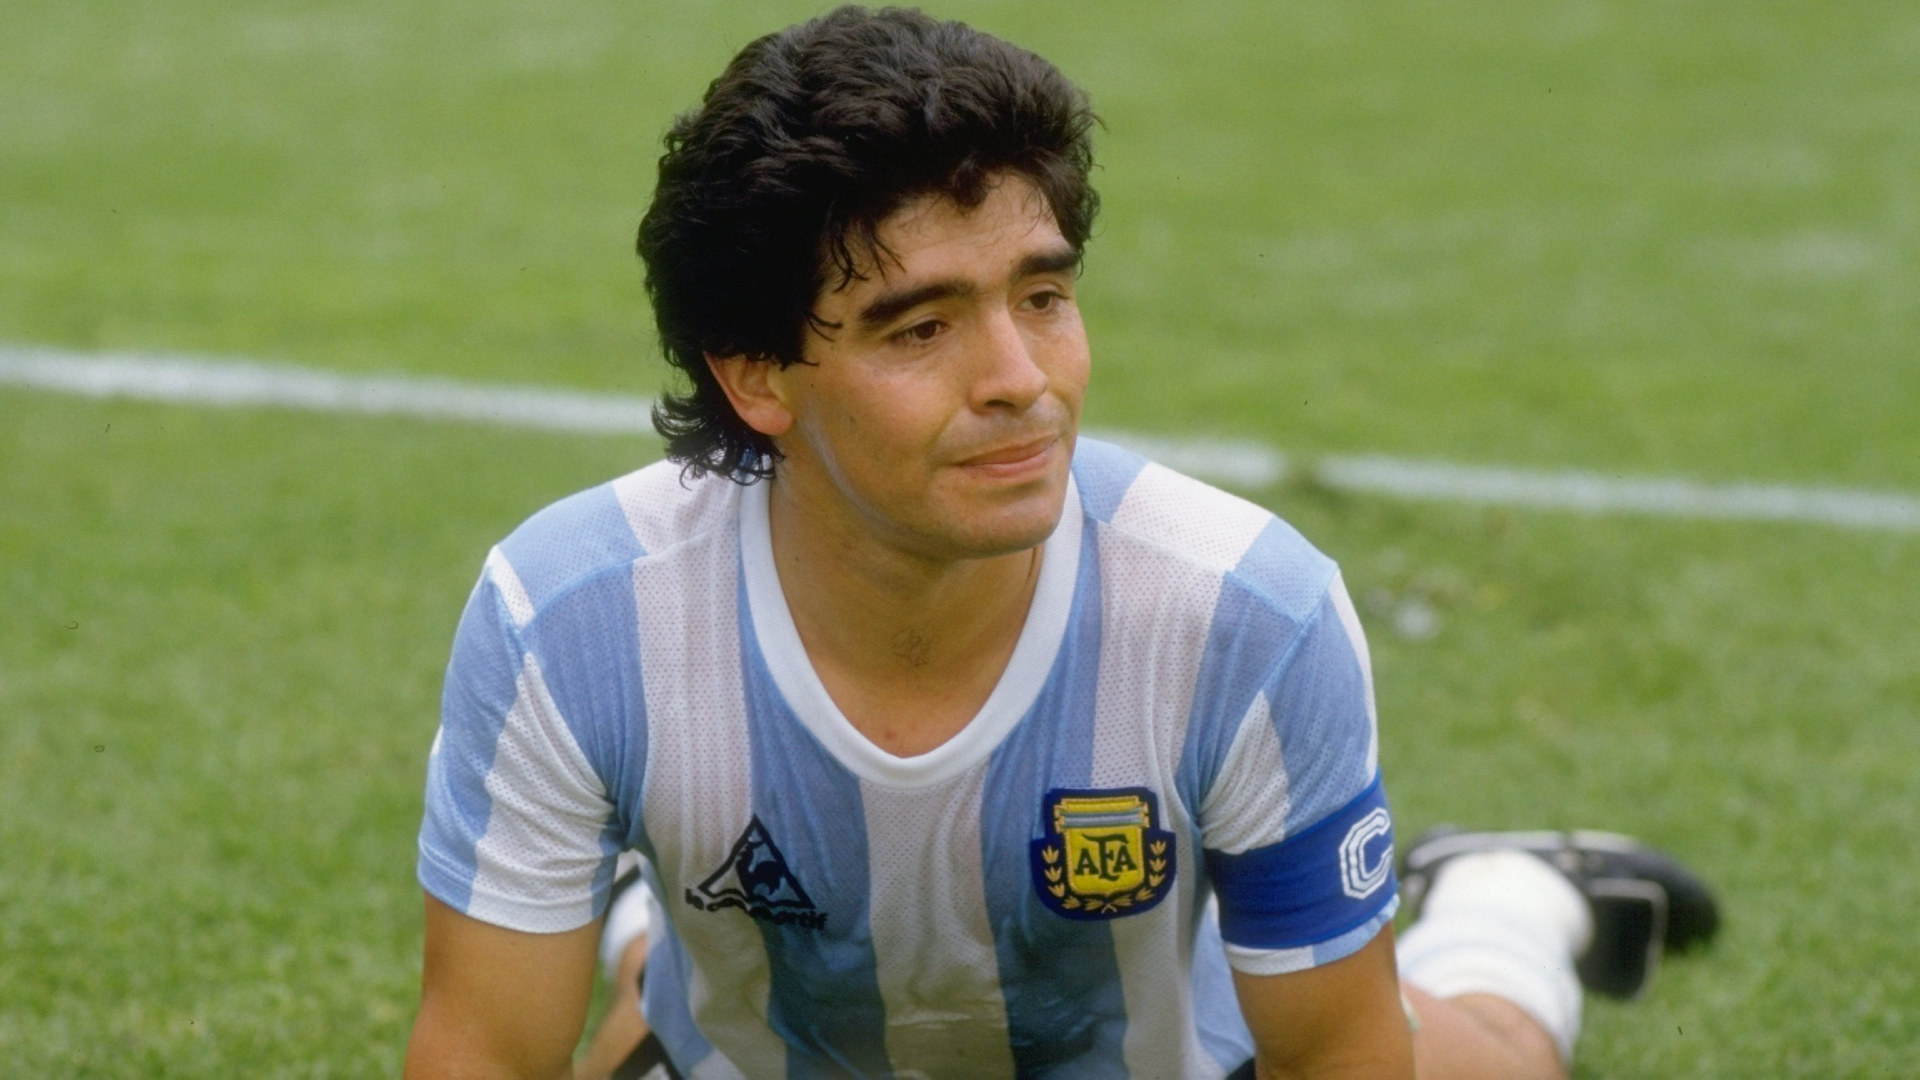 Maradona and pele HD wallpaper